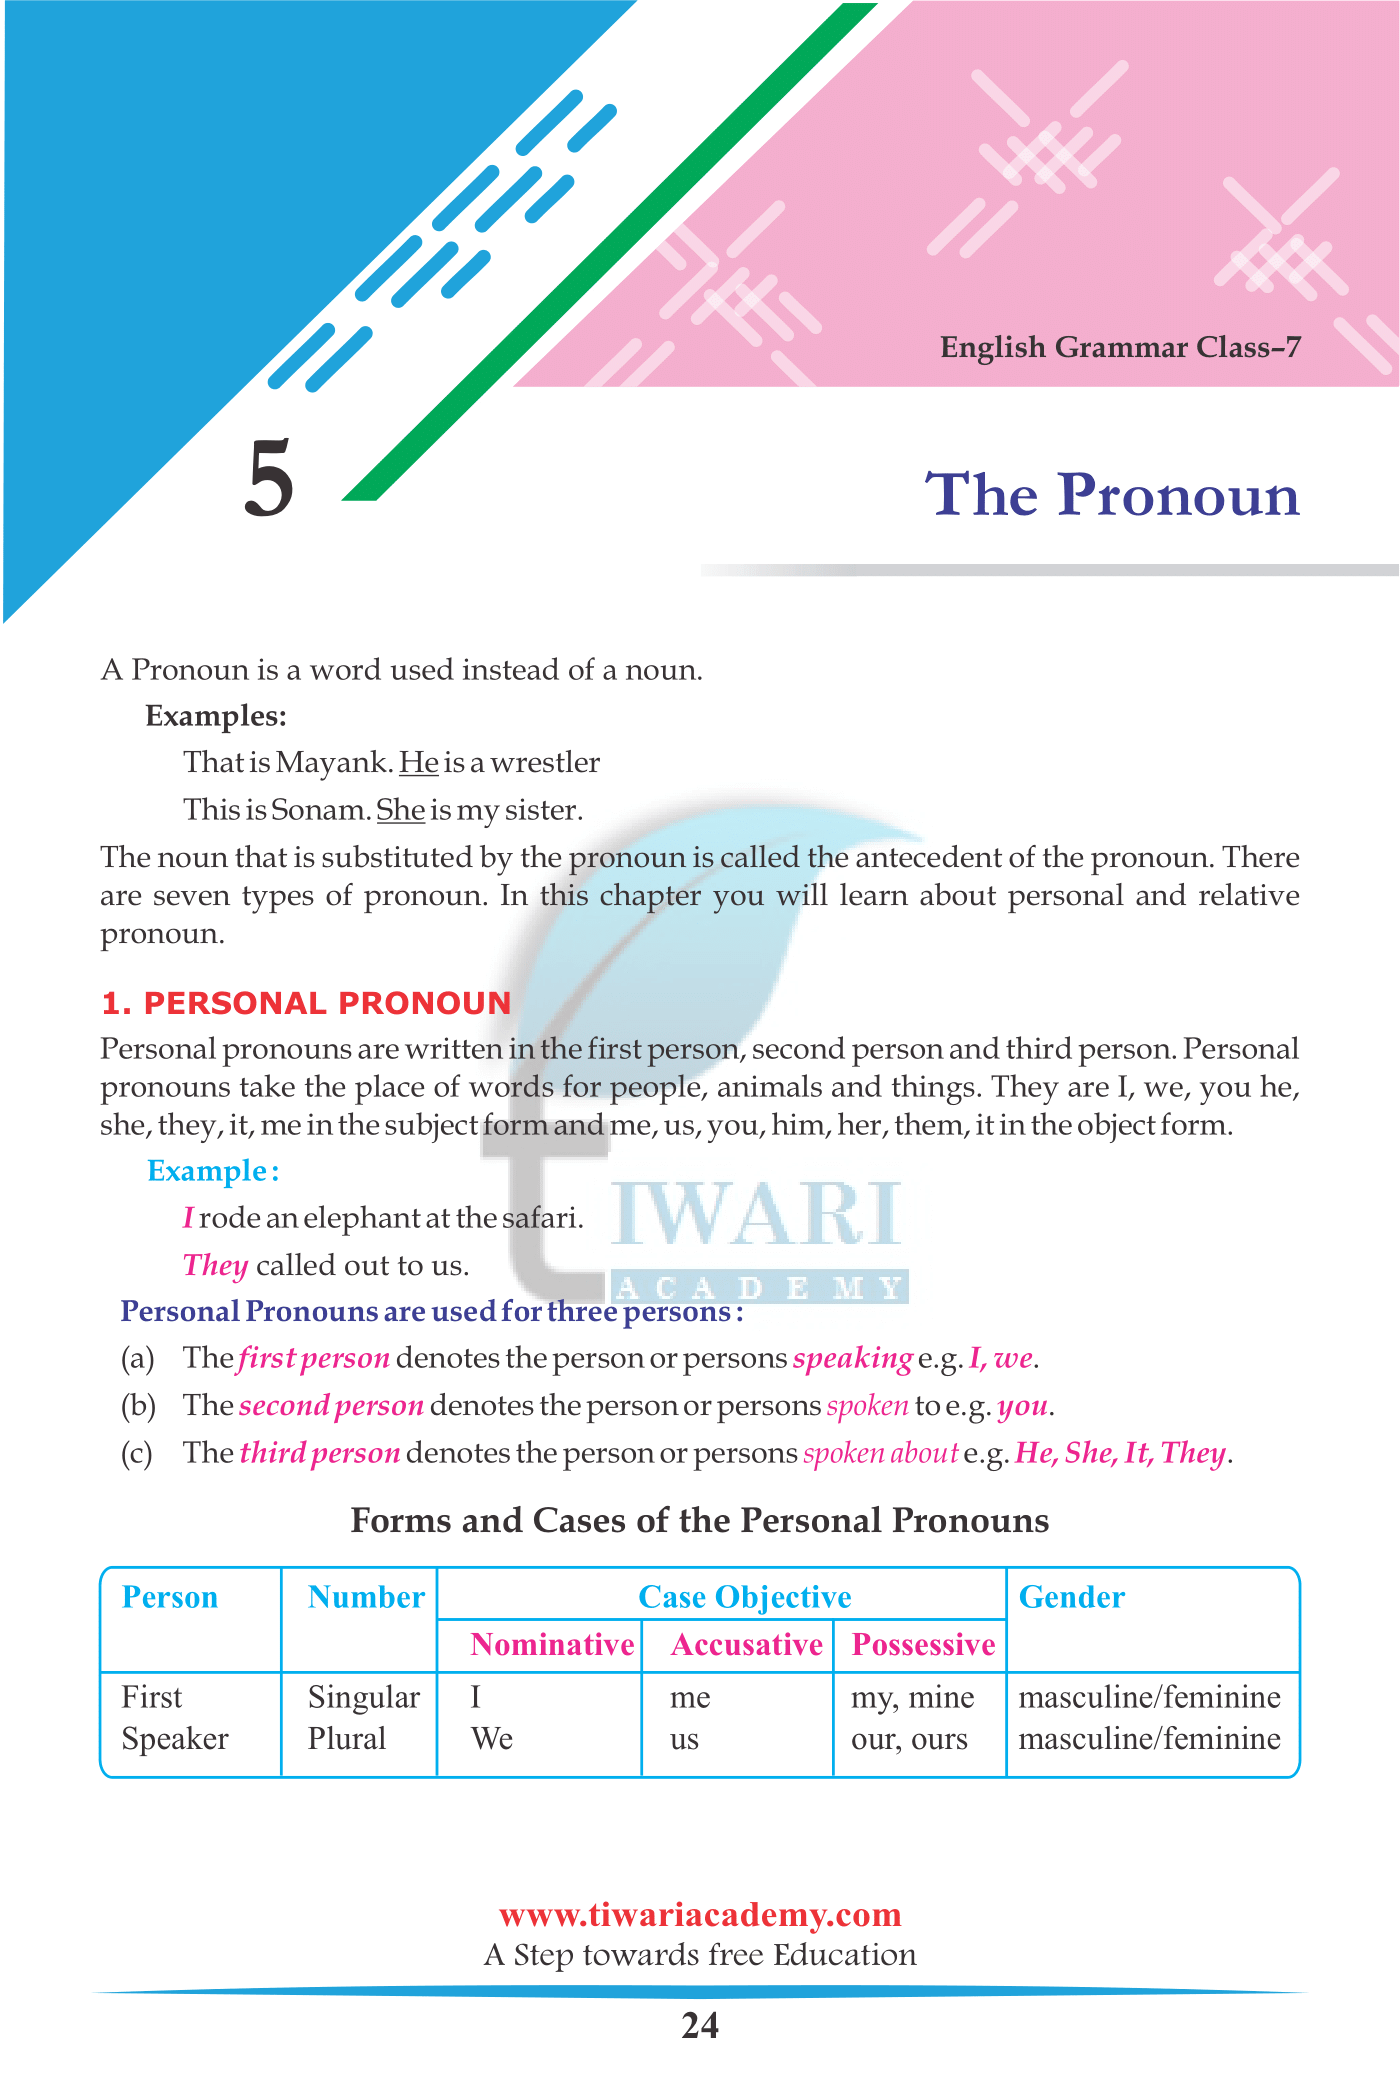 Class 7 English Grammar Chapter 5 The Pronoun and kinds